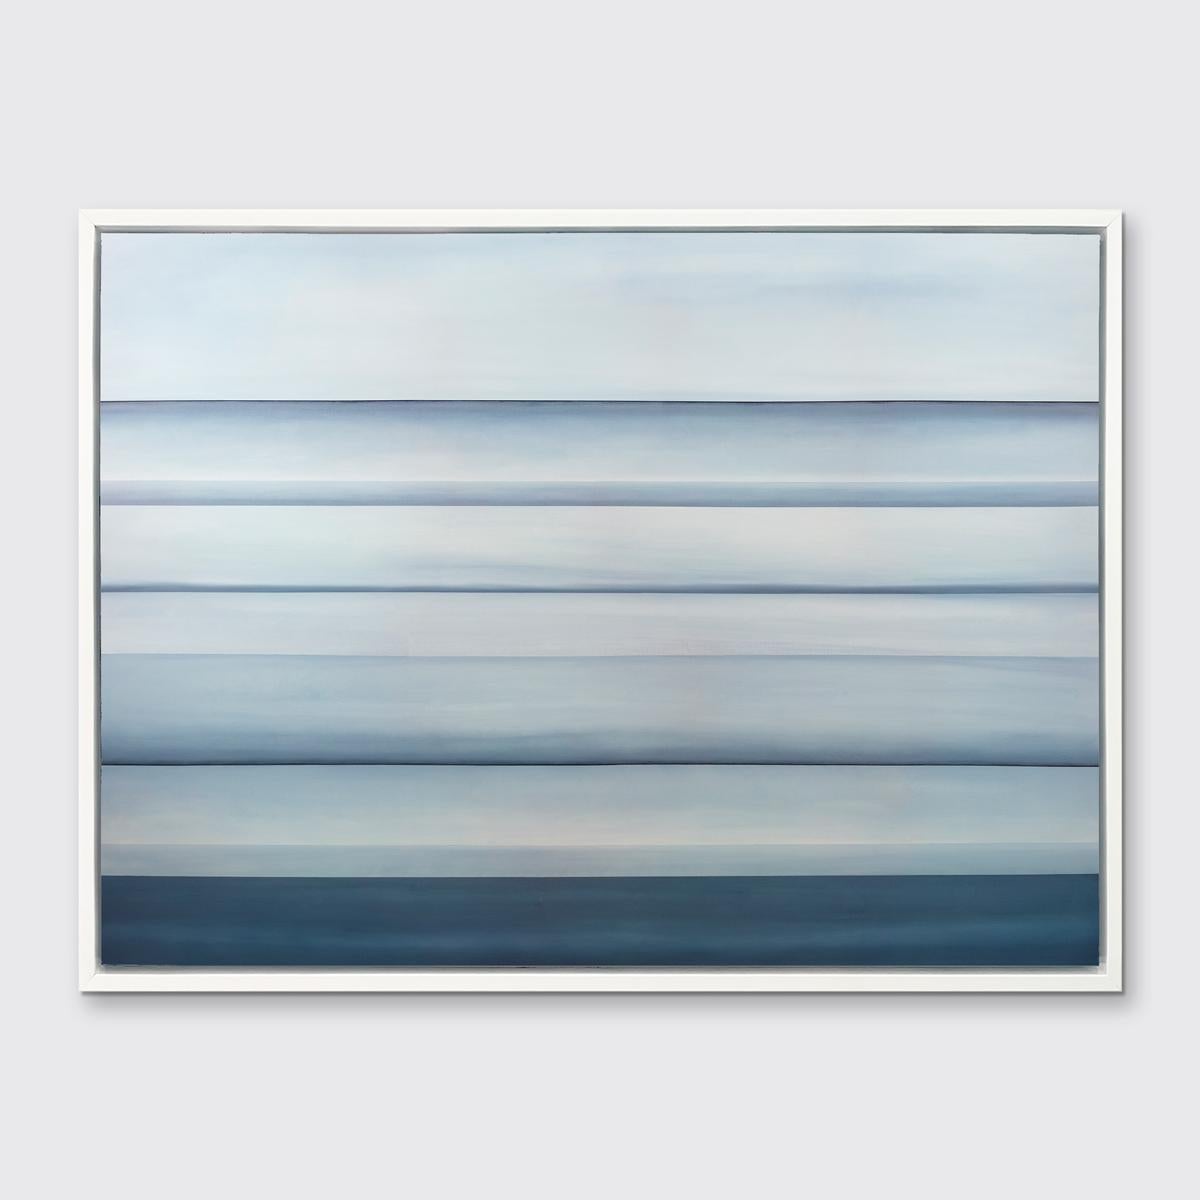 Tony Iadicicco Abstract Print - "Each Step" Framed Limited Edition Giclee Print, 24" x 32"